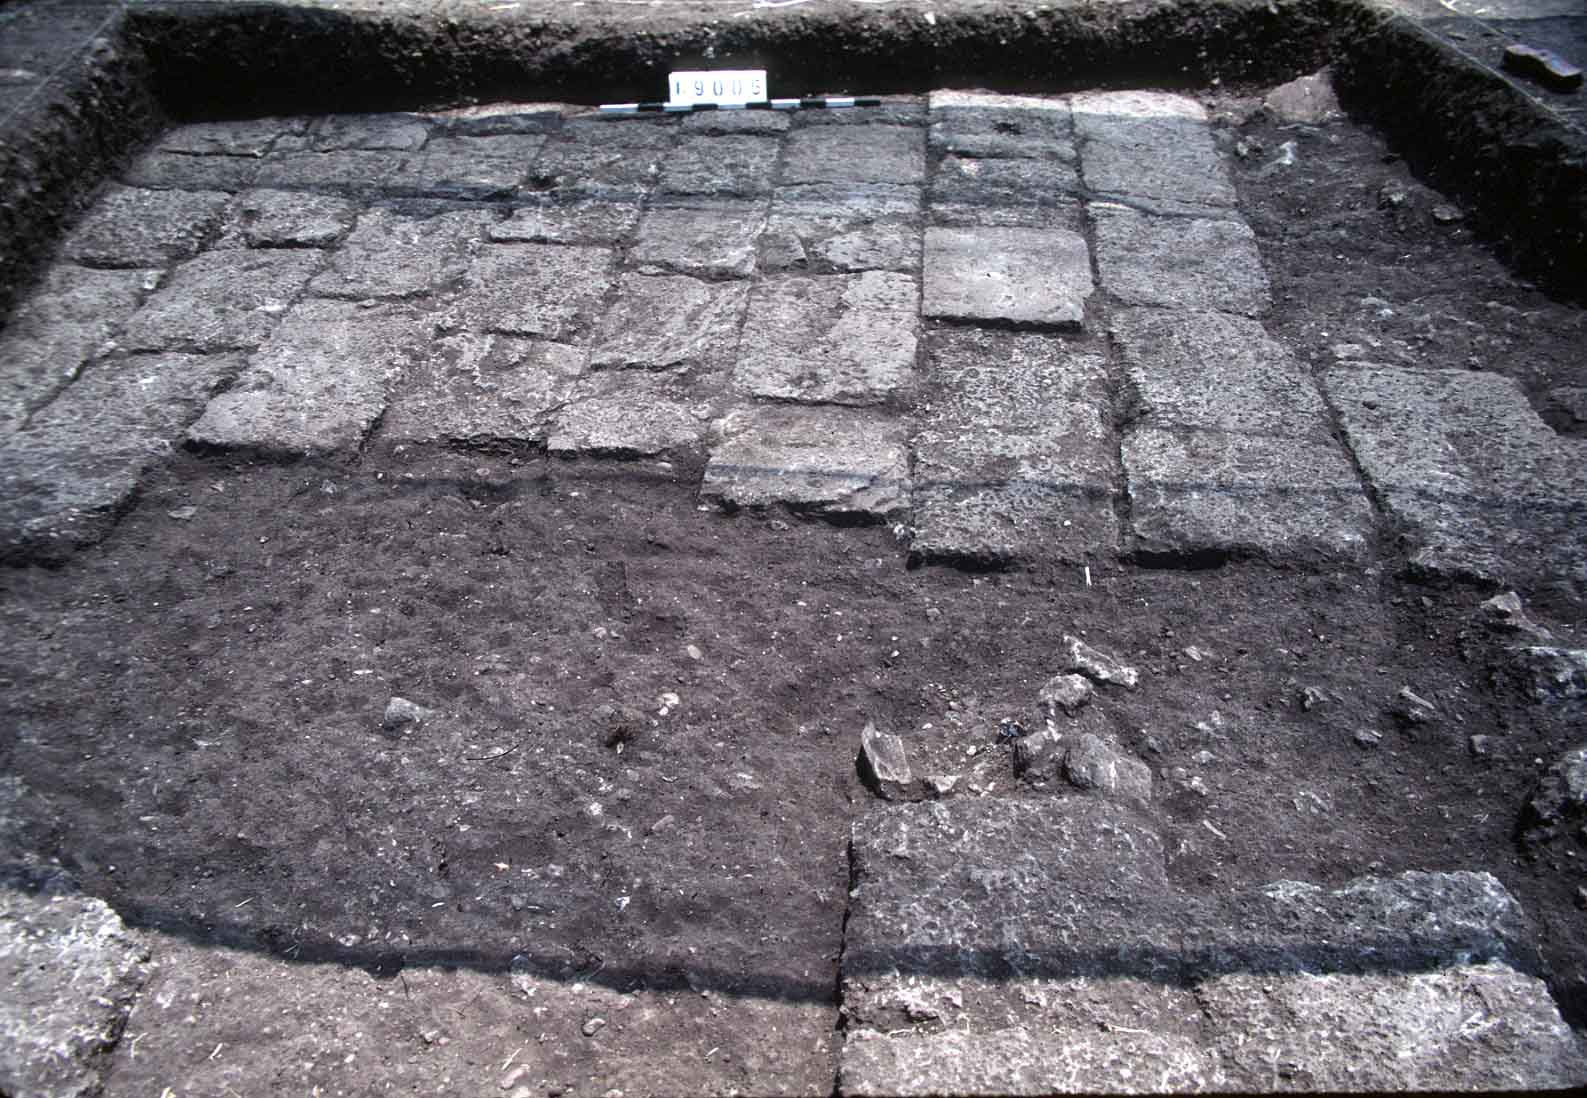 The Roman 'piazza' pavement